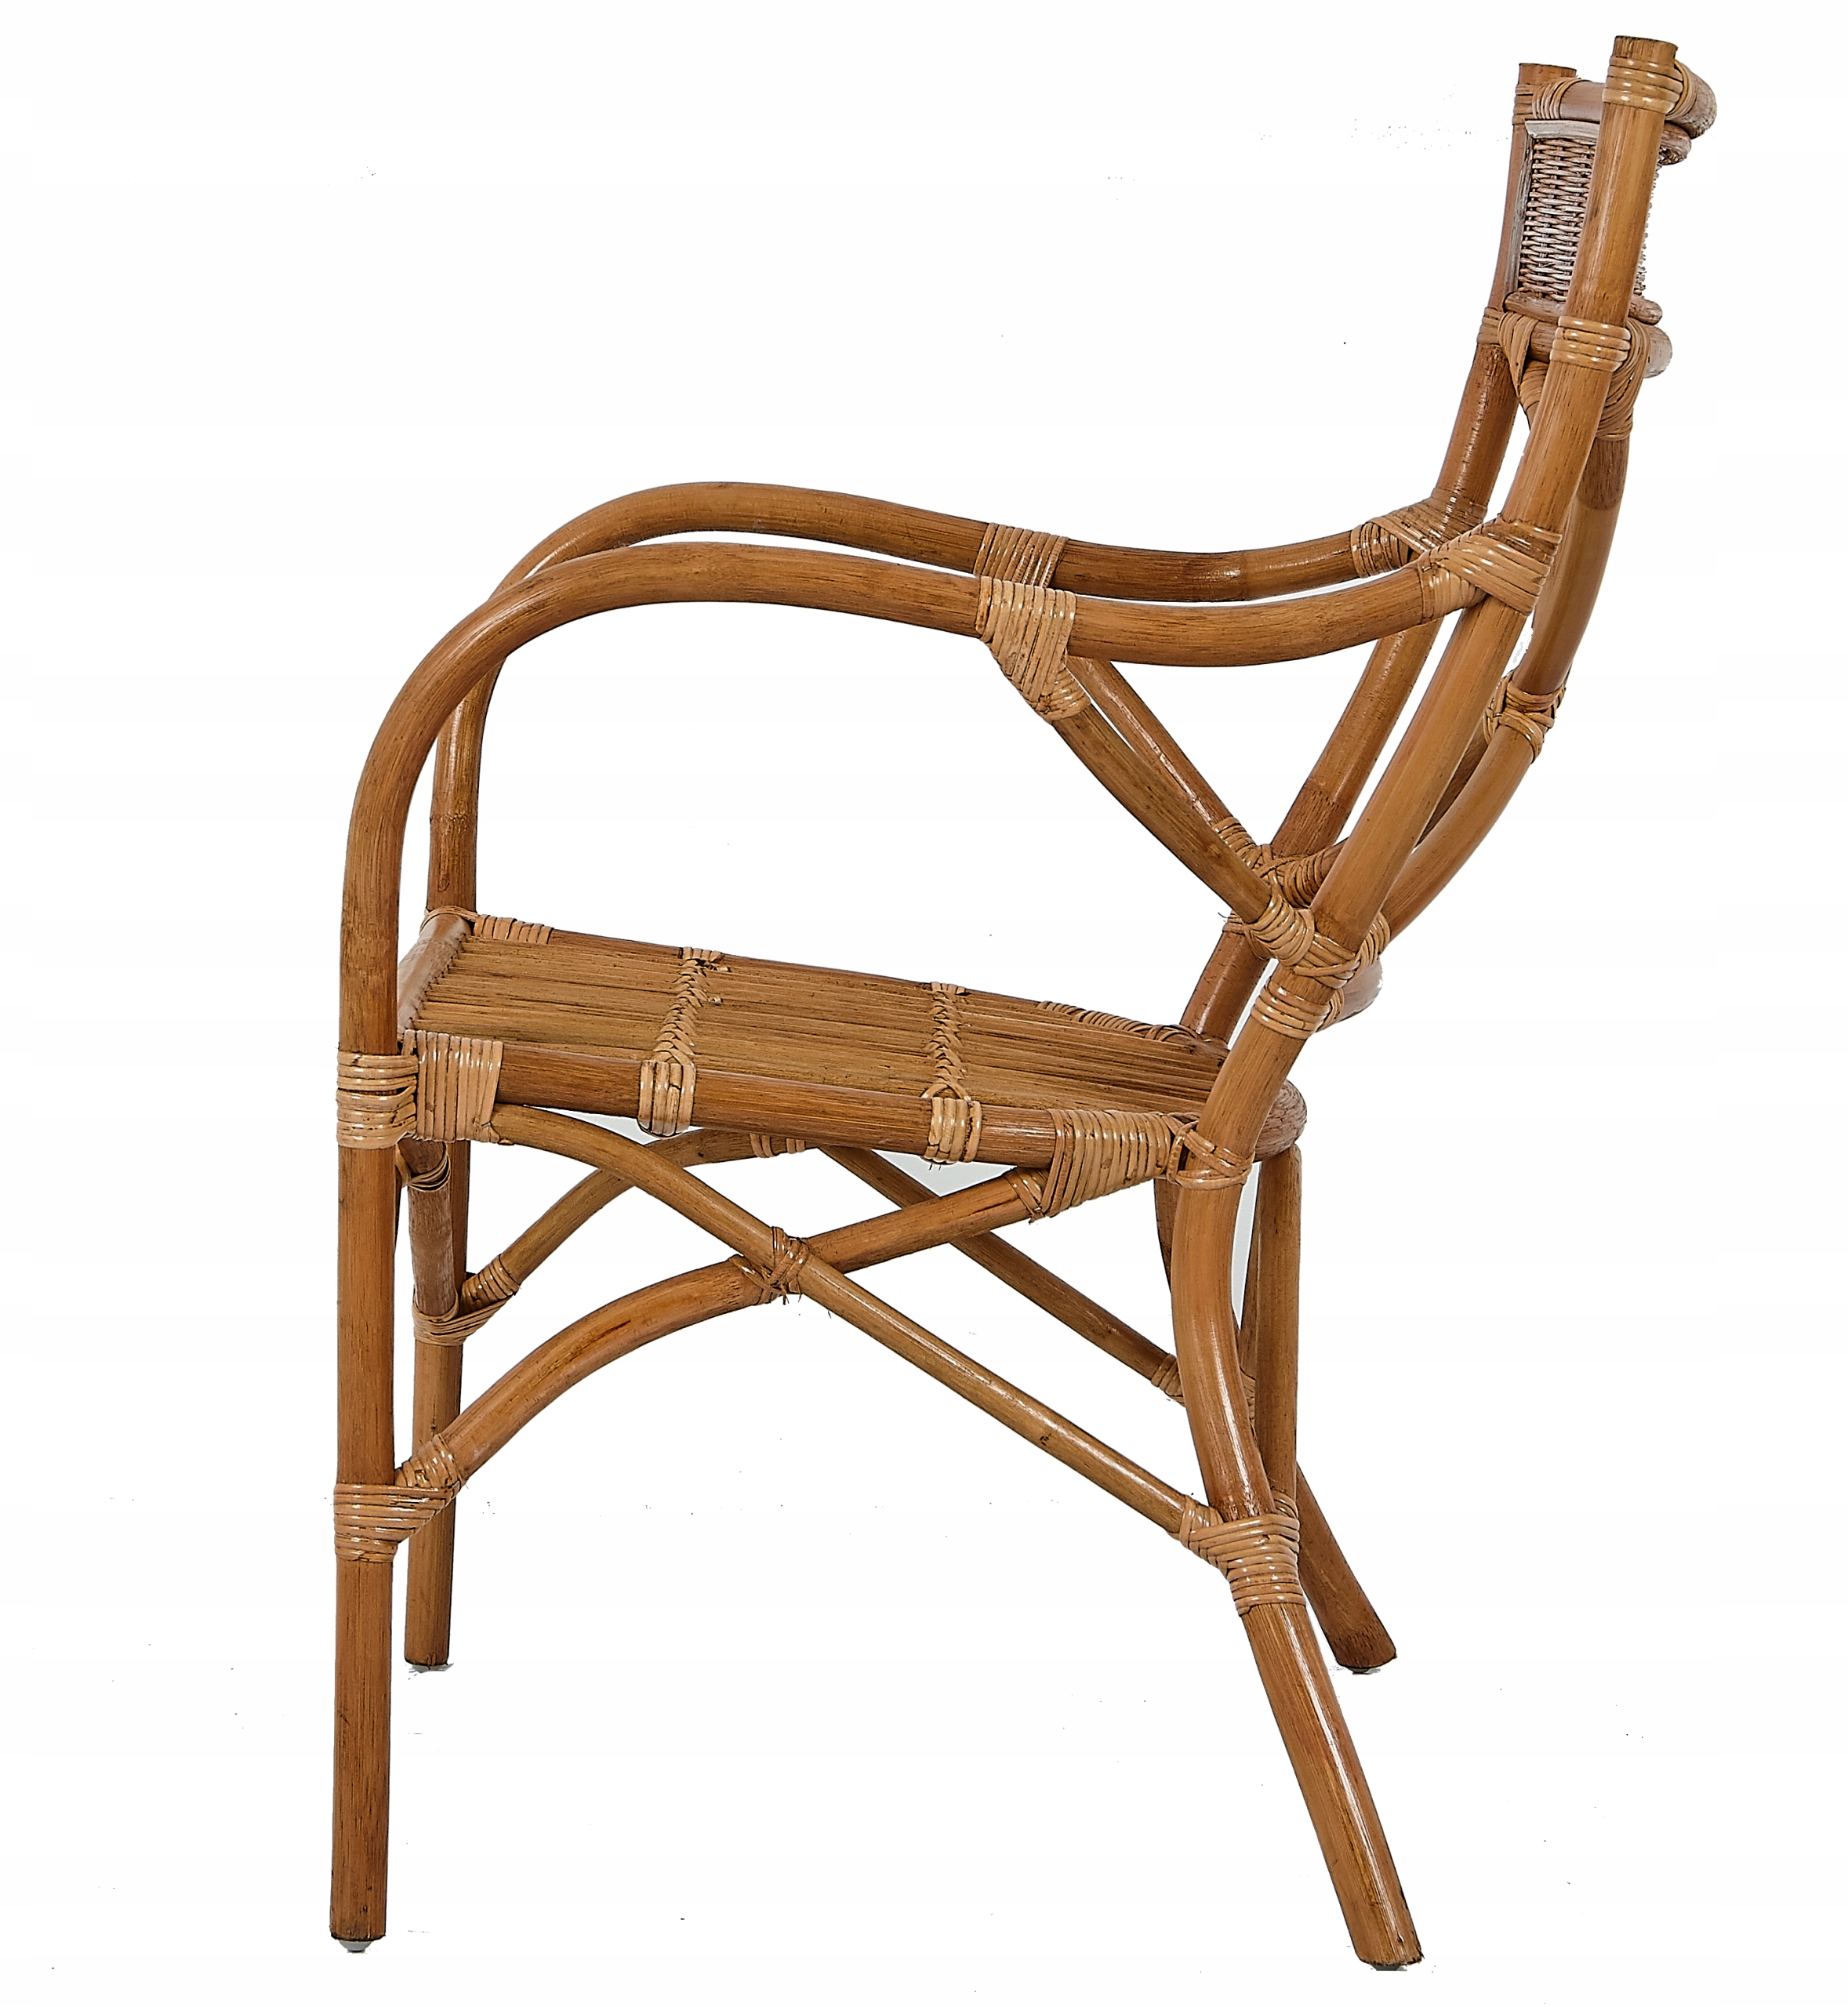 PANJI EXCLUSIVE набор мебели из ротанга бежевого и коричневого цветов